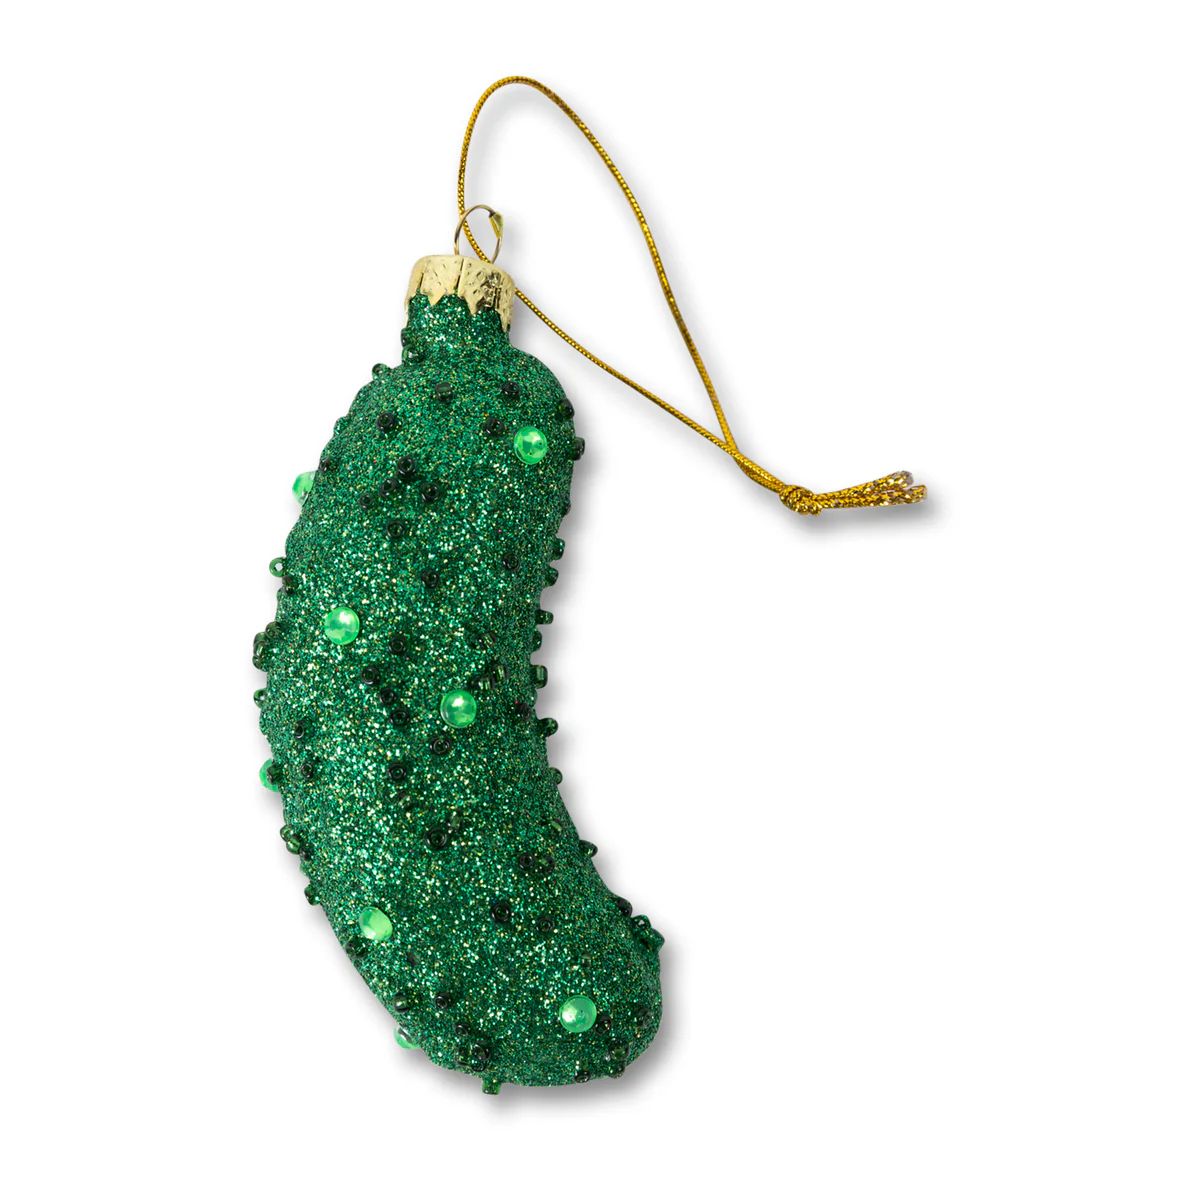 Furbish Studio - Jeweled Pickle Ornament | Furbish Studio